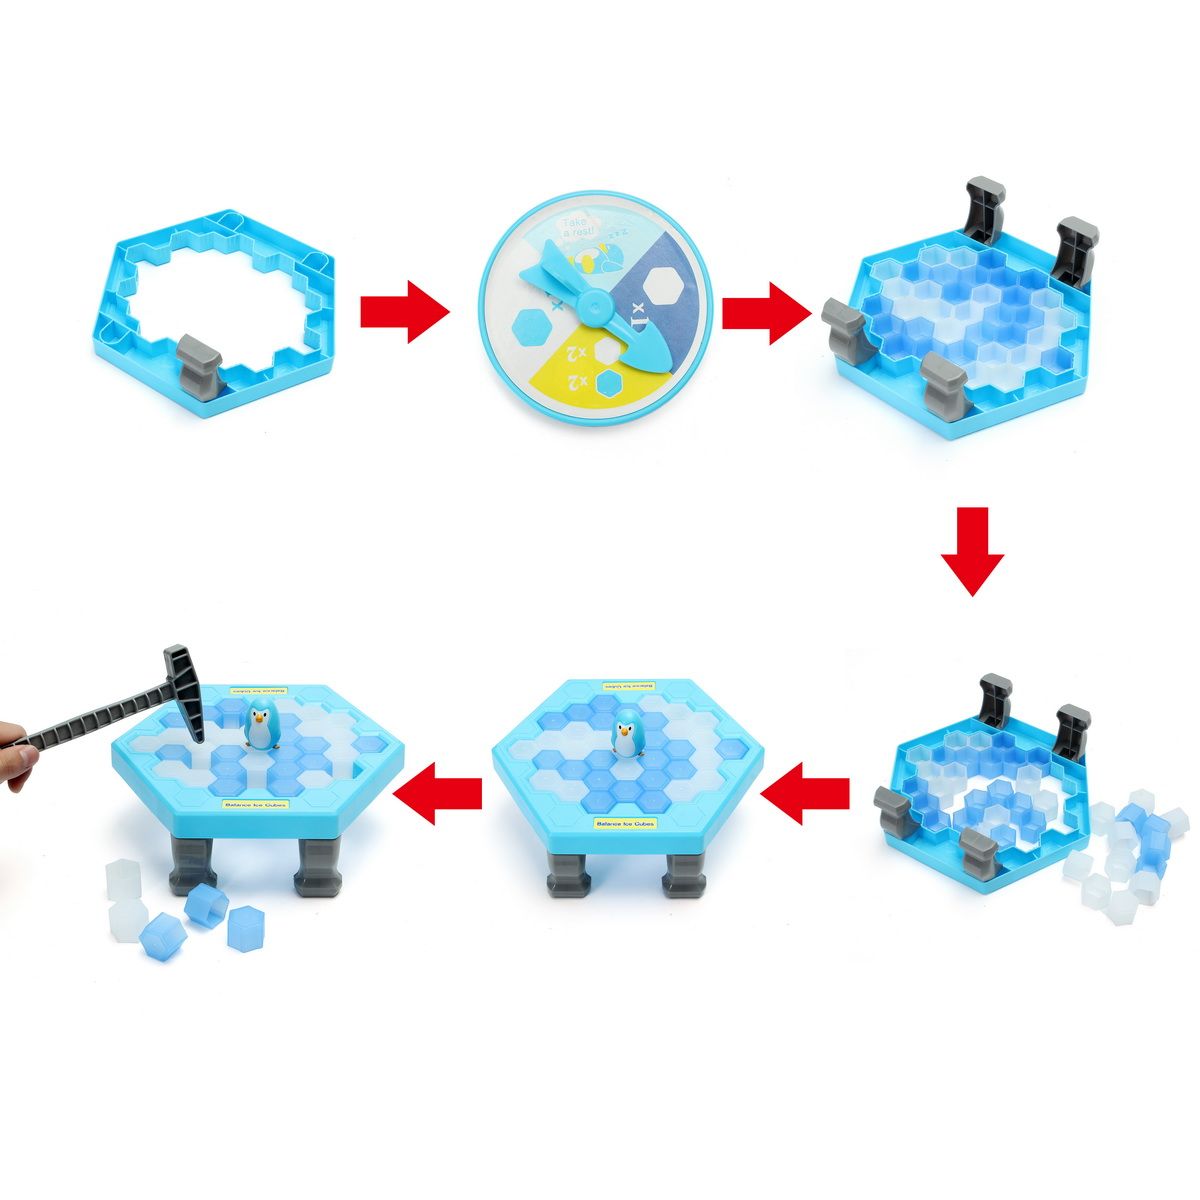 Icebreaker-Penguin-Trap-Kids-Puzzle-Desktop-Game-Ice-Cubes-Block-Family-Fun-Toys-1613186